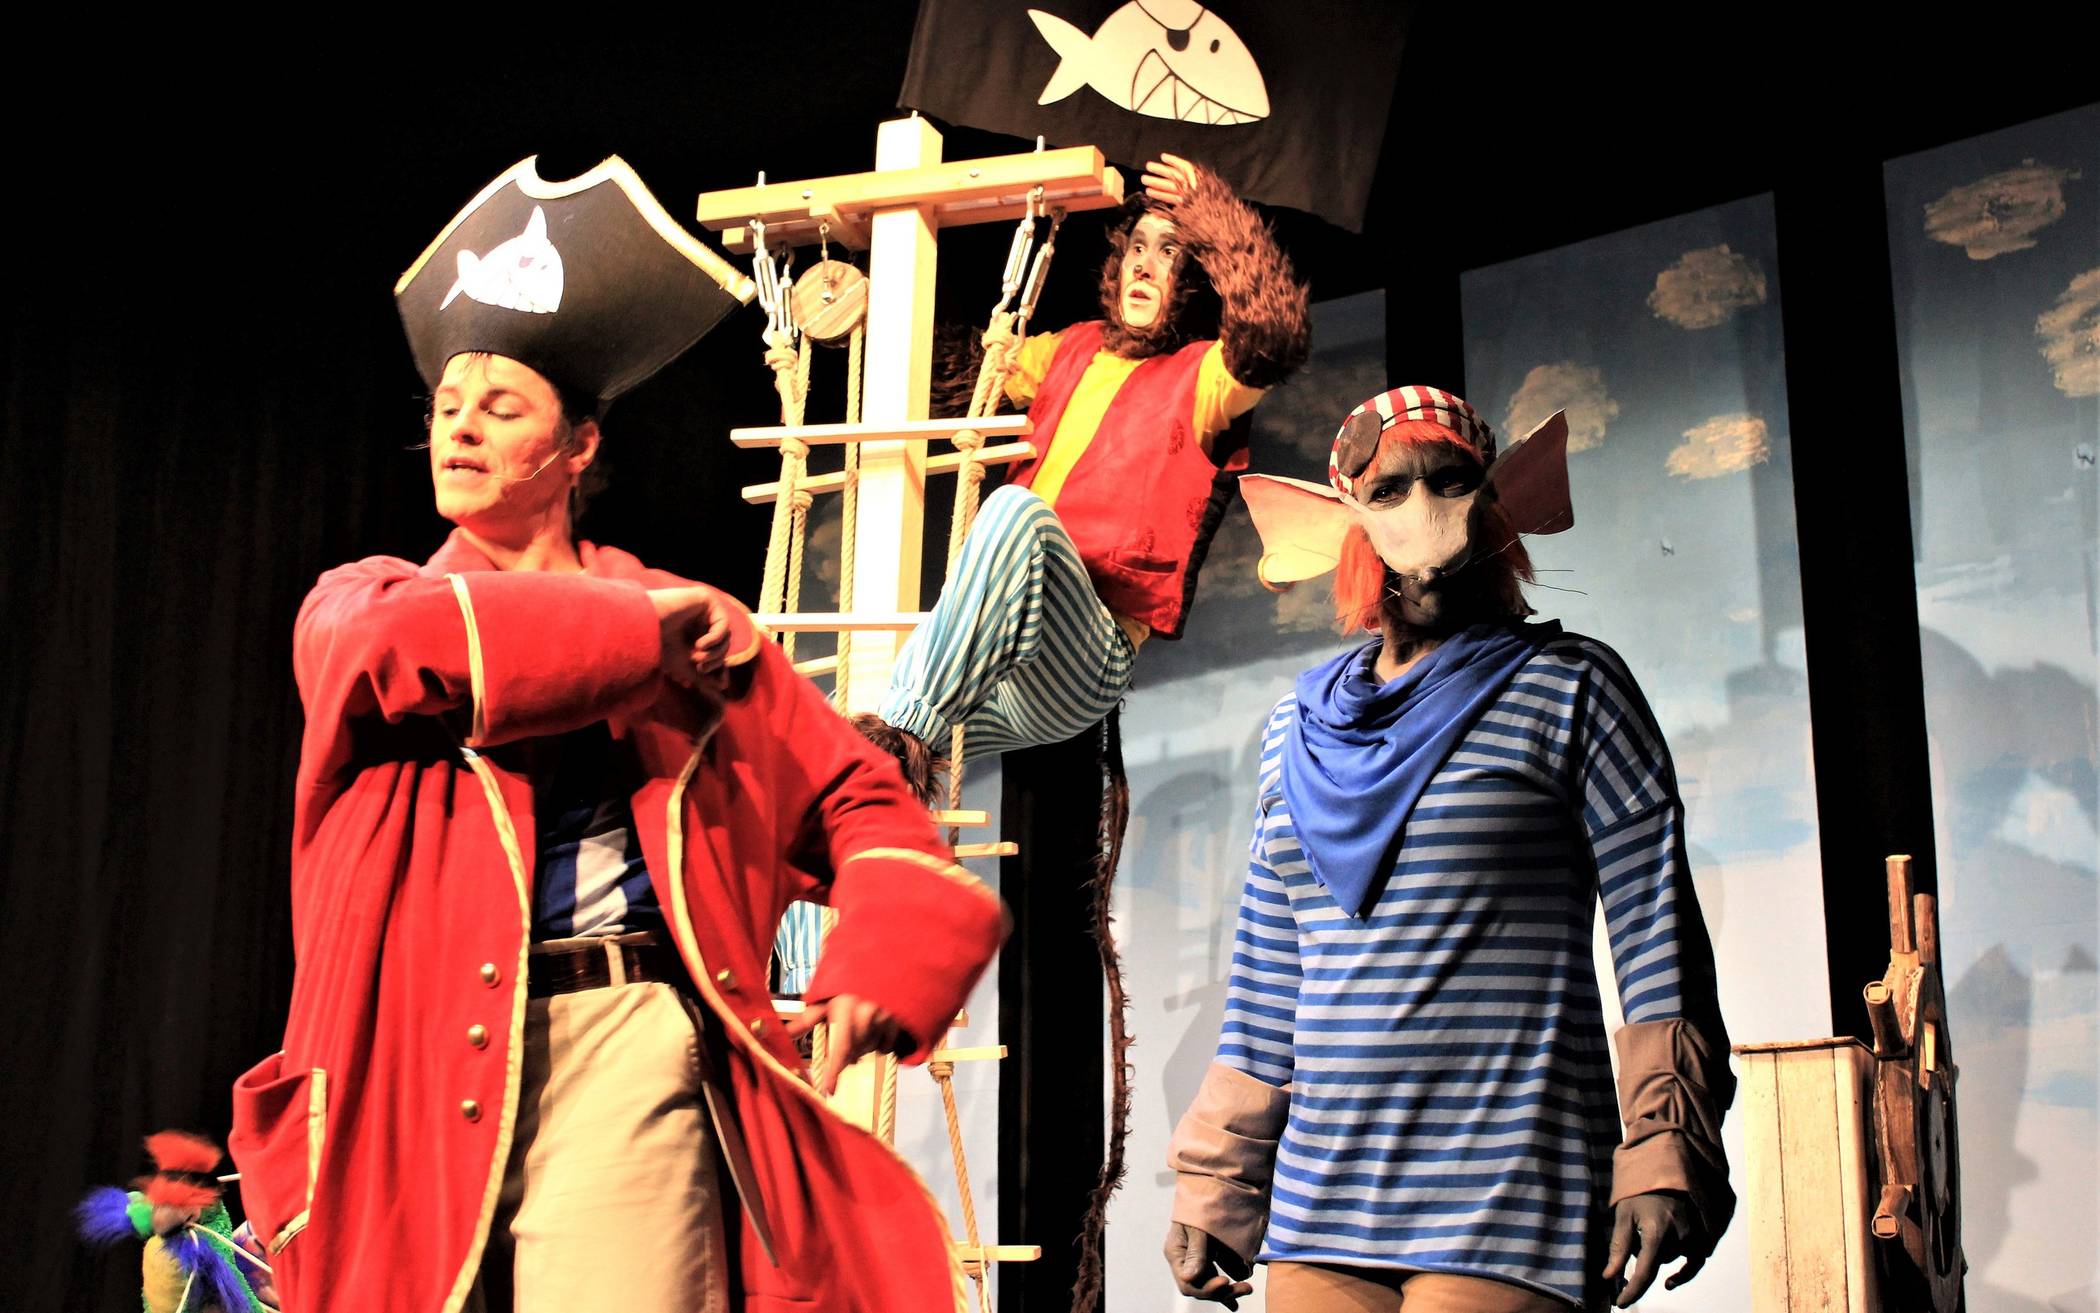  Am 31. Januar zeigt das Wülfrather Theater "Minestrone" das Kindermusical "Käpt'n Sharky". 